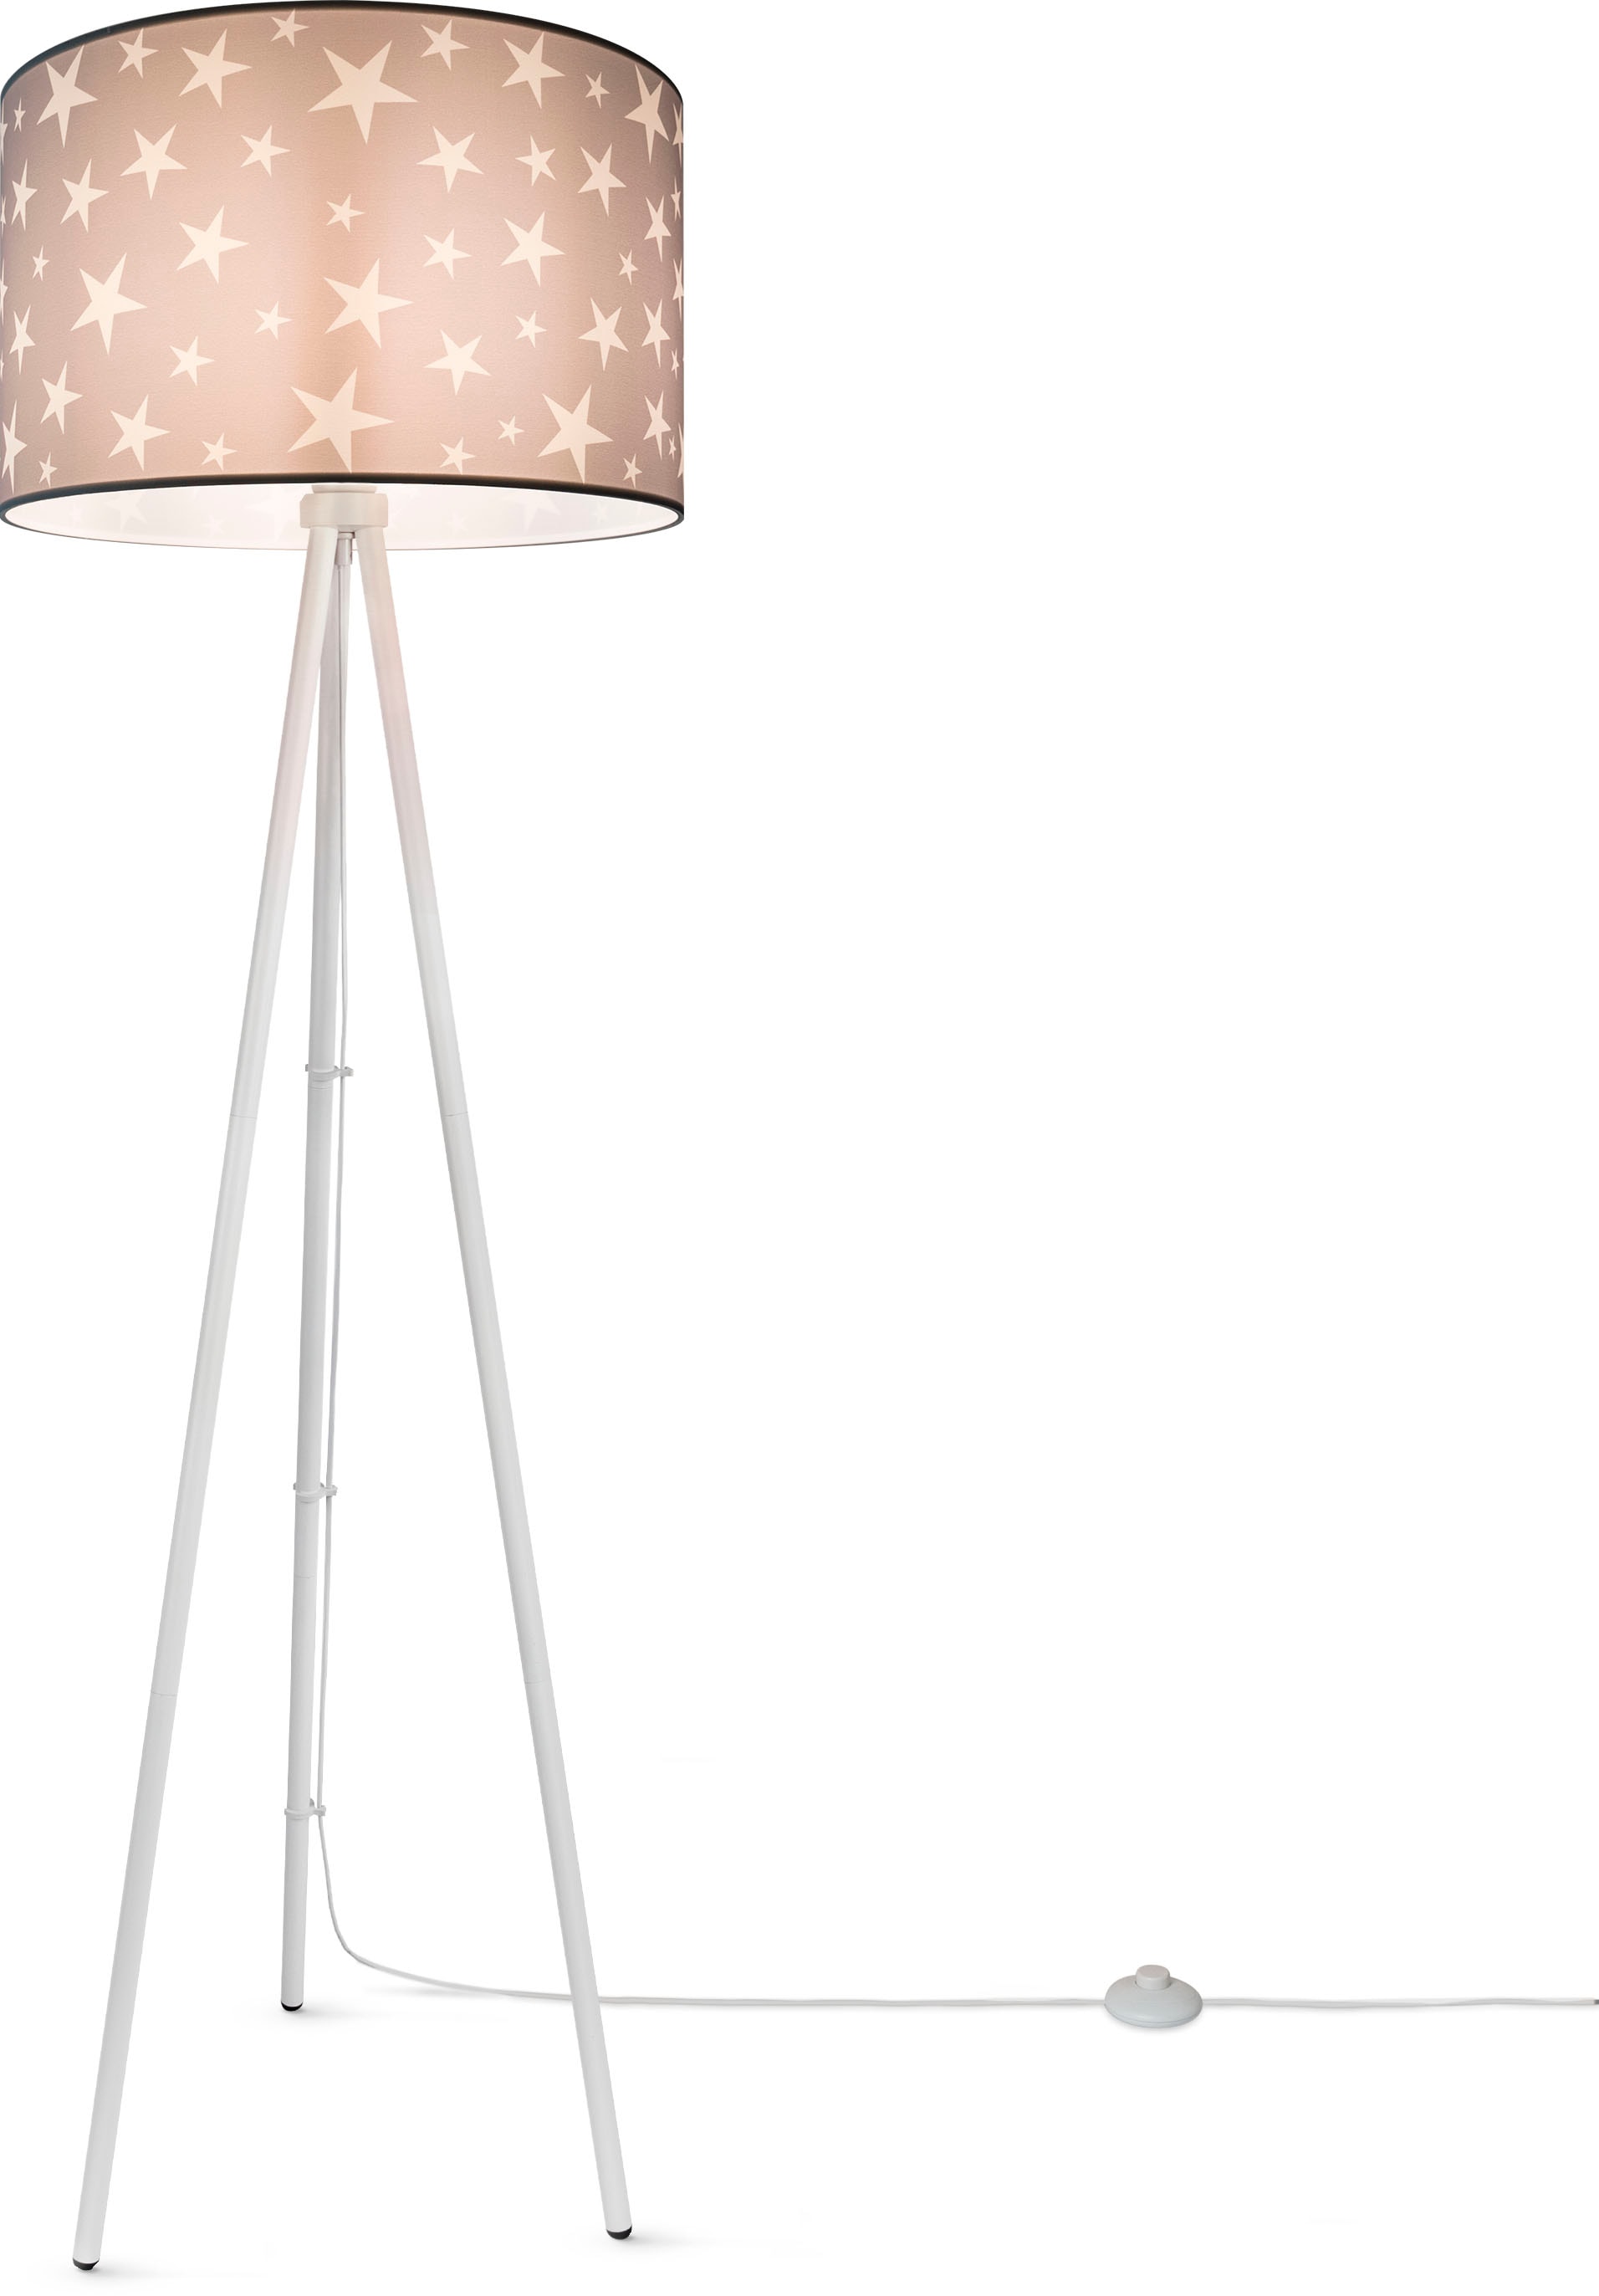 Paco Home Stehlampe »Trina Capri«, Kinderlampe LED Kinderzimmer, Sternen-Motiv, Deko Stehleuchte E27